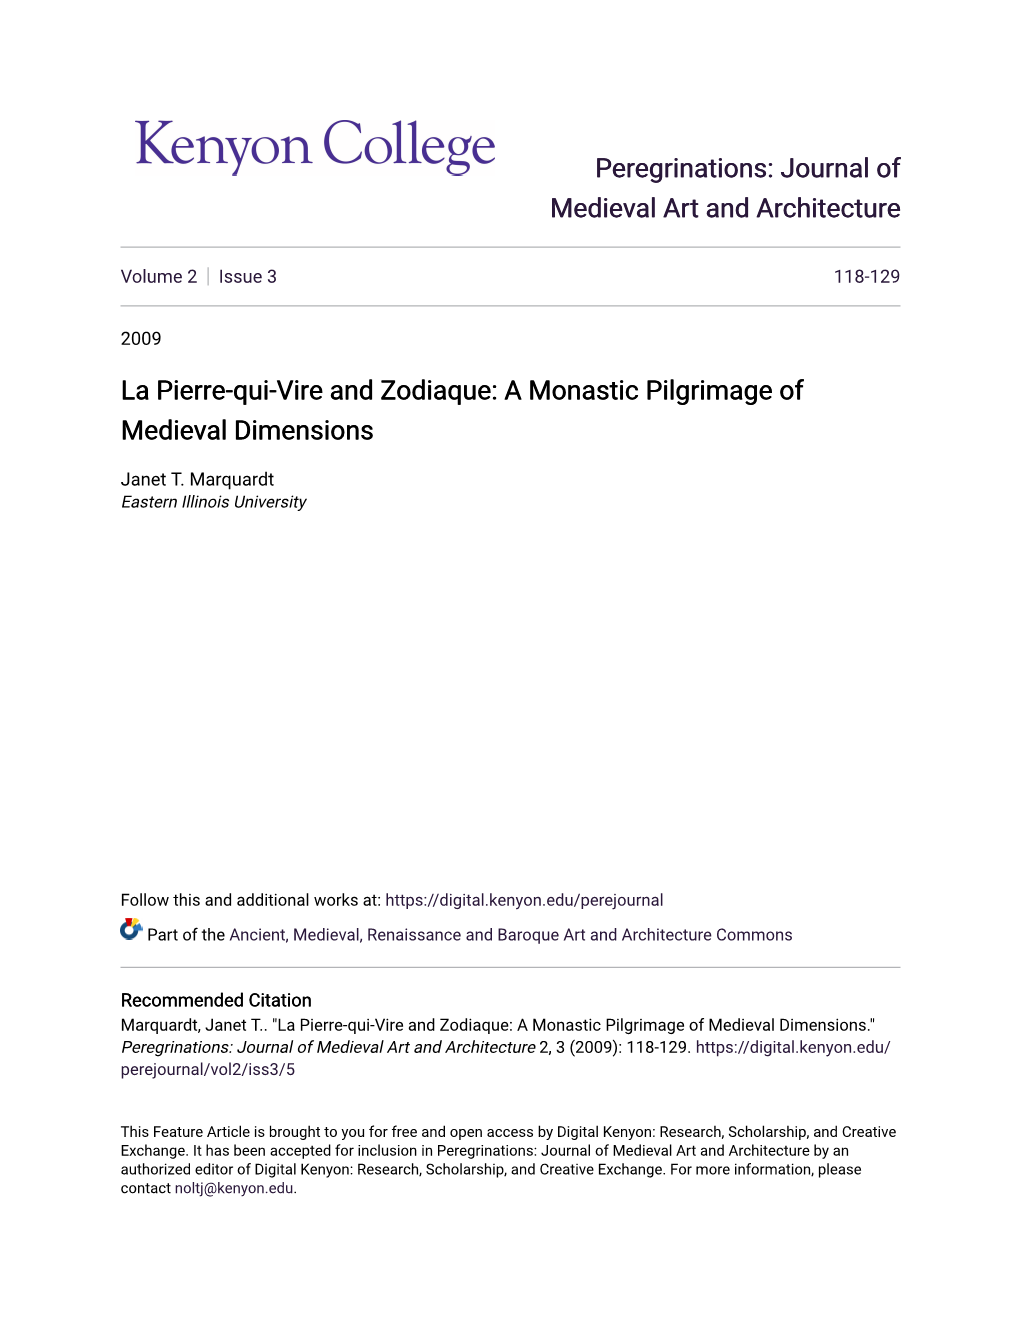 La Pierre-Qui-Vire and Zodiaque: a Monastic Pilgrimage of Medieval Dimensions